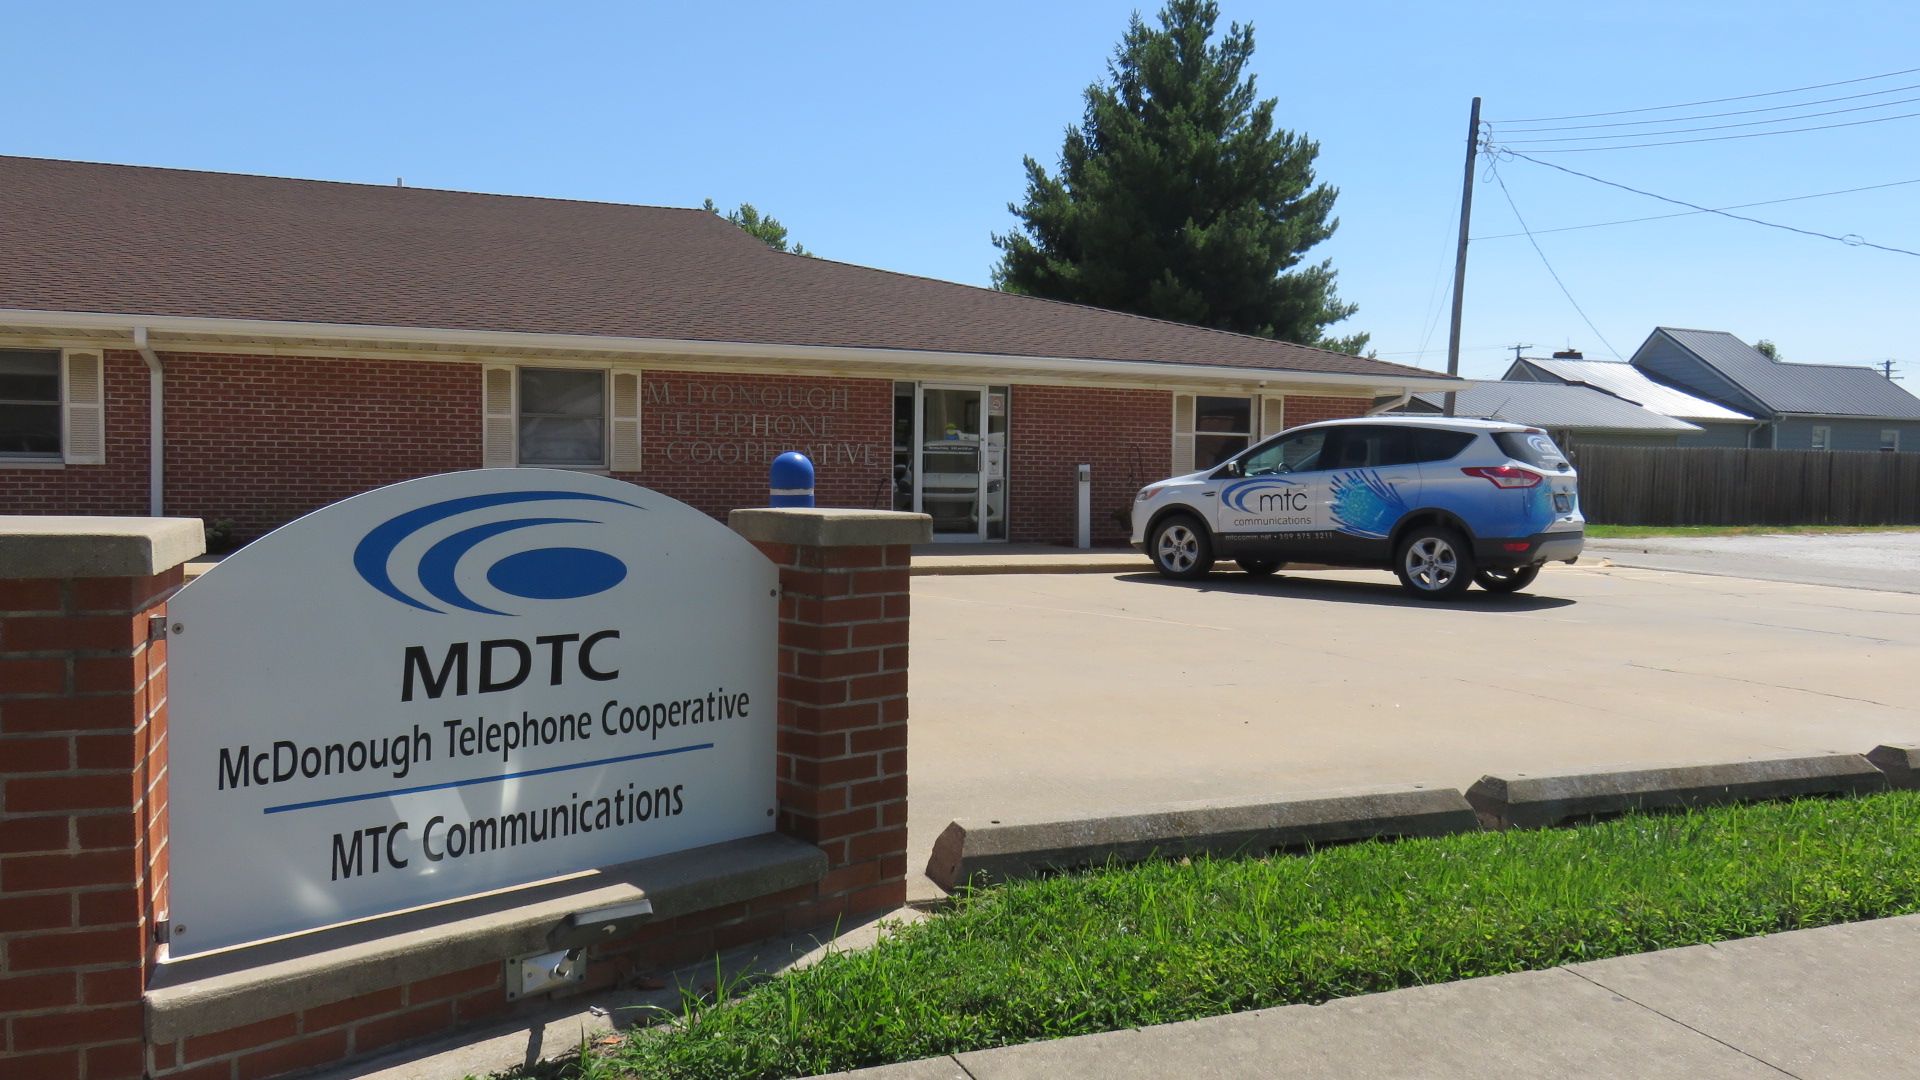 McDonough Telephone Cooperative - MTC Communications